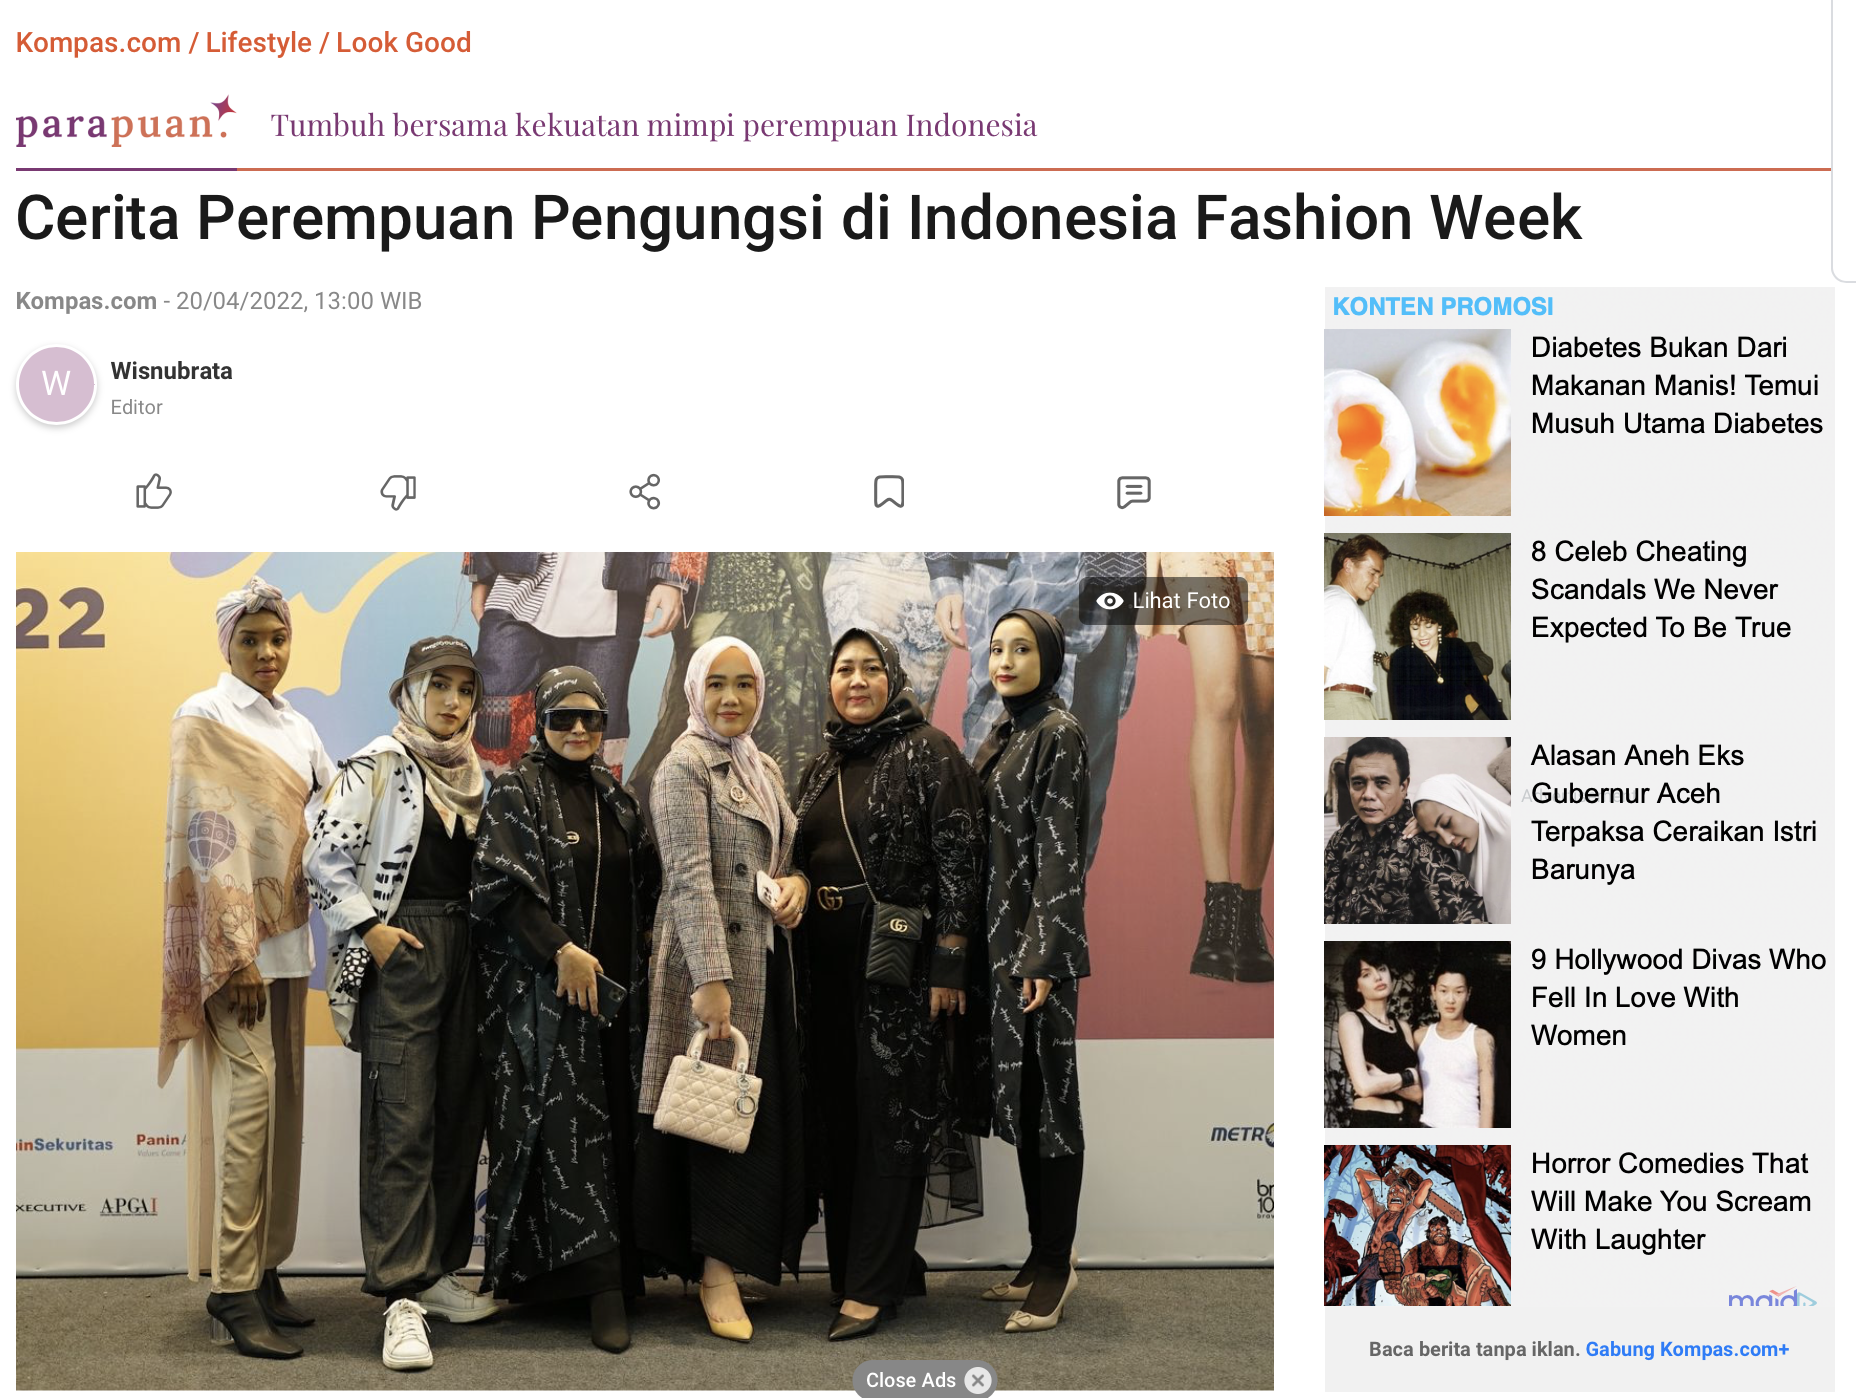 Cerita Perempuan Pengungsi di Indonesia Fashion Week